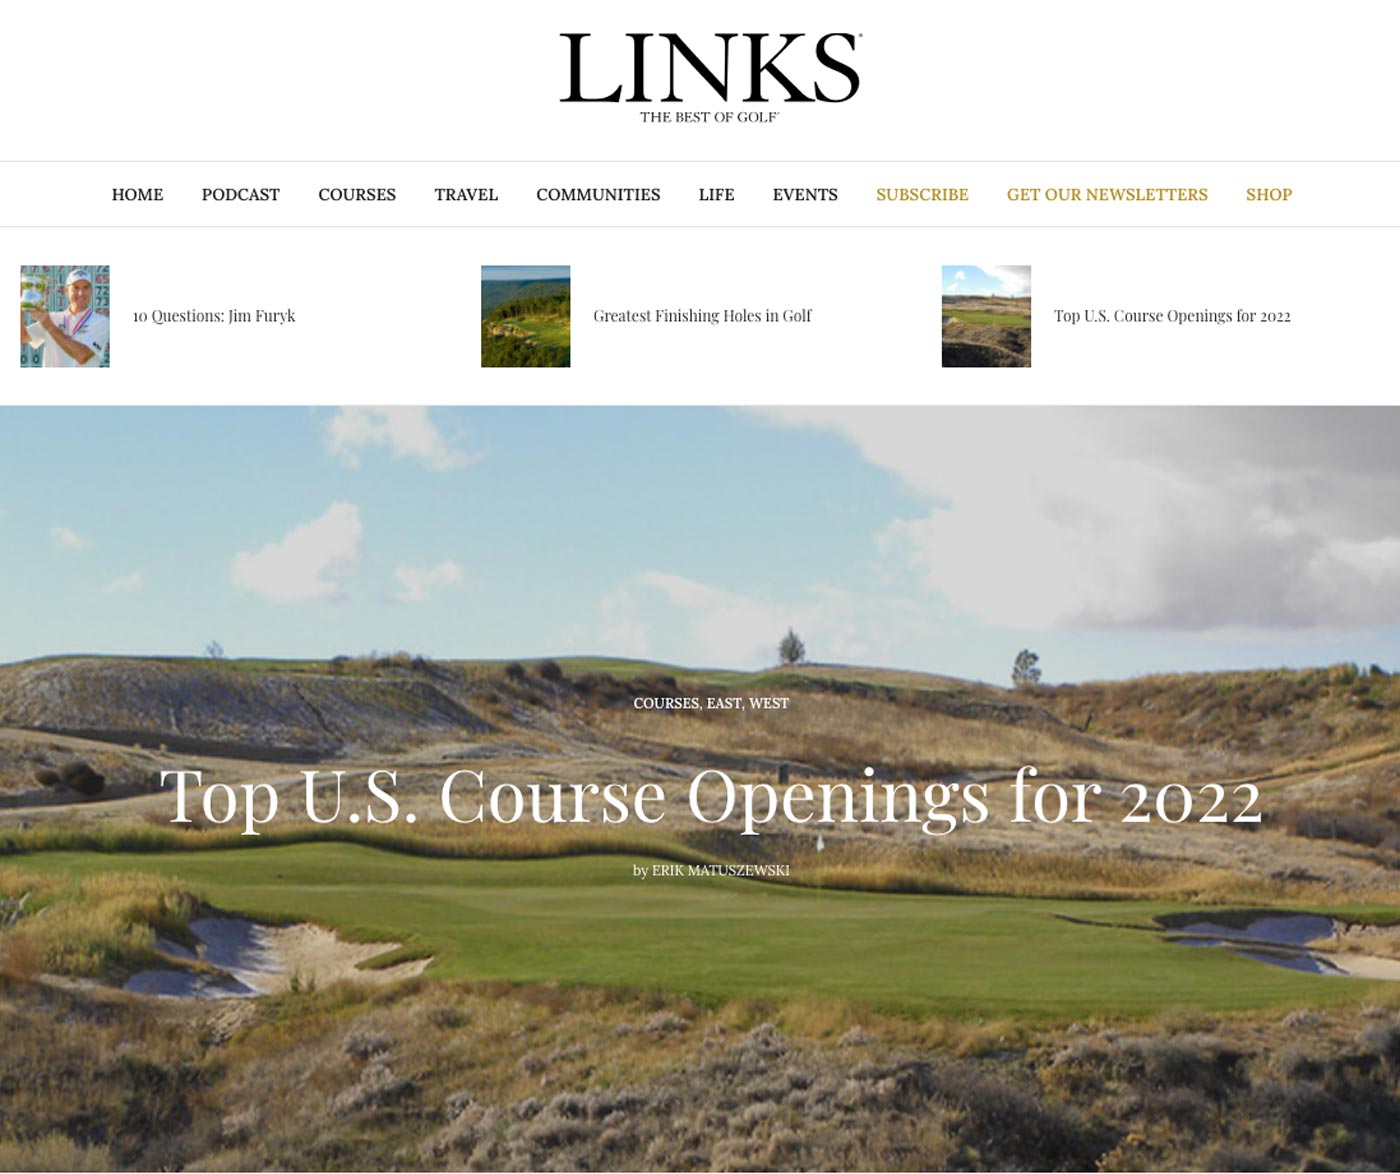 LINKS Top U.S. Course Openings in 2022